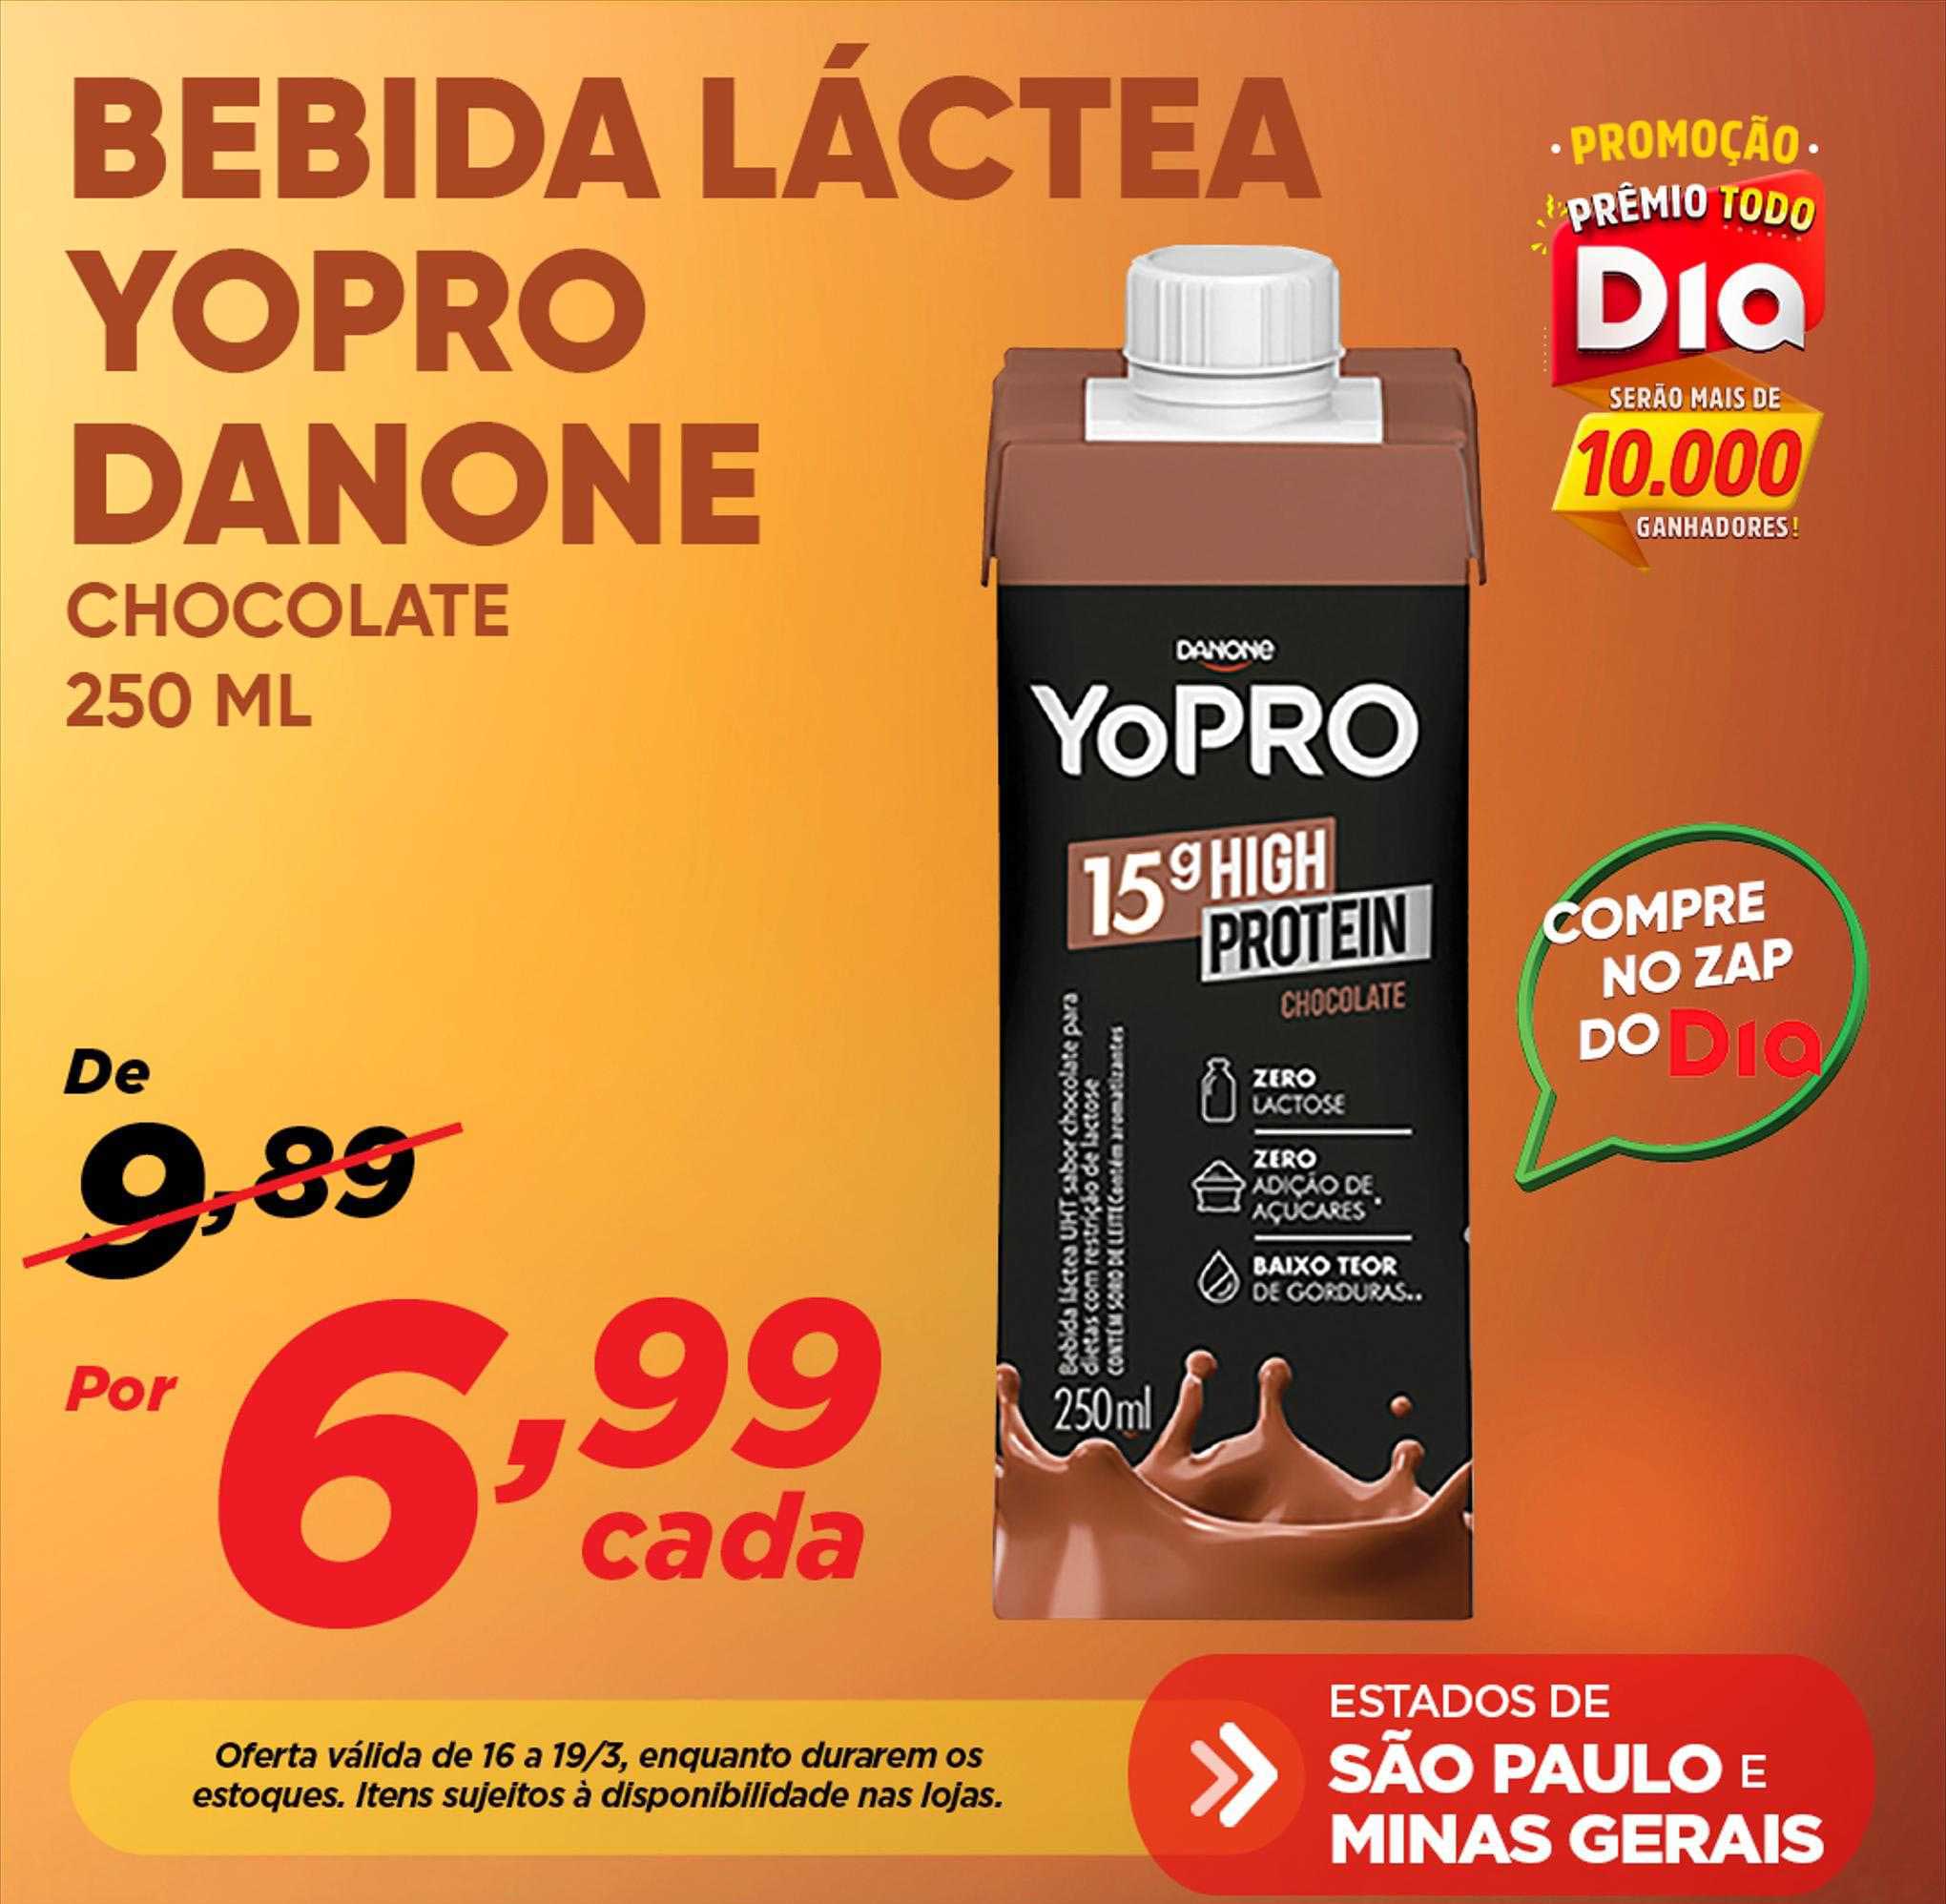 Oferta Bebida Láctea Yopro Danone Chocolate na Supermercado Dia ...